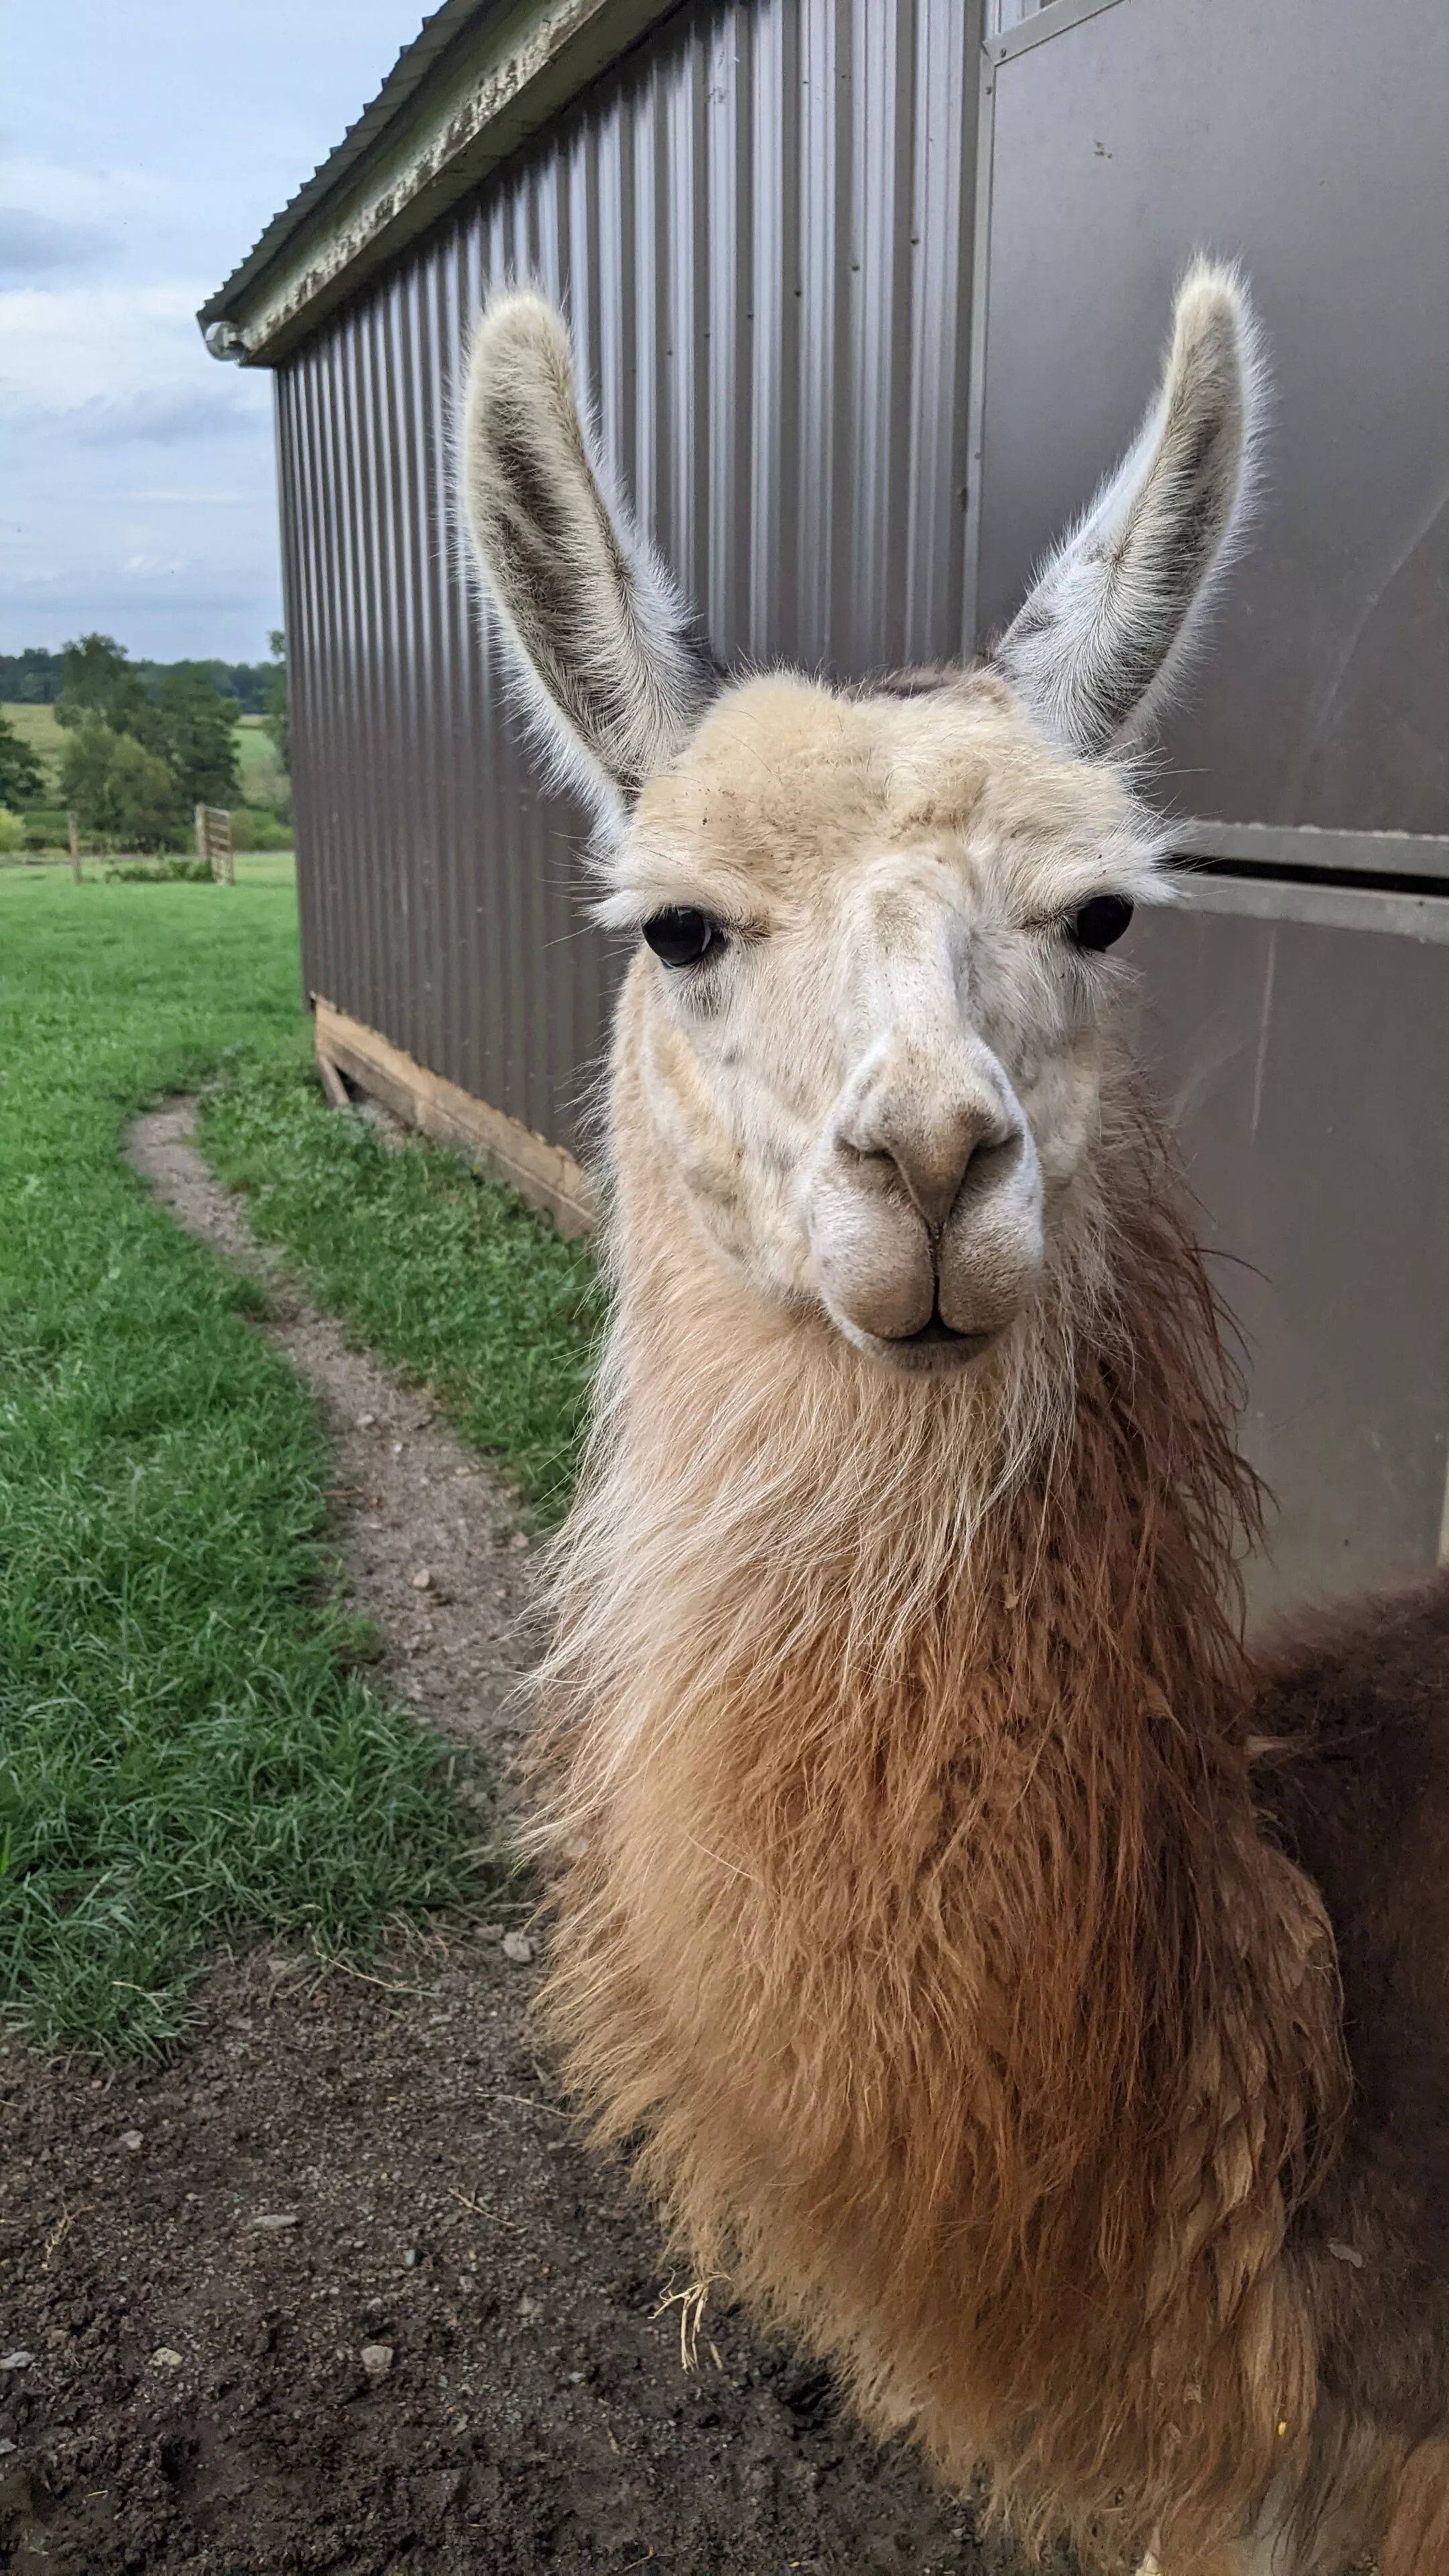 An image of a llama named Lottie outside a barn